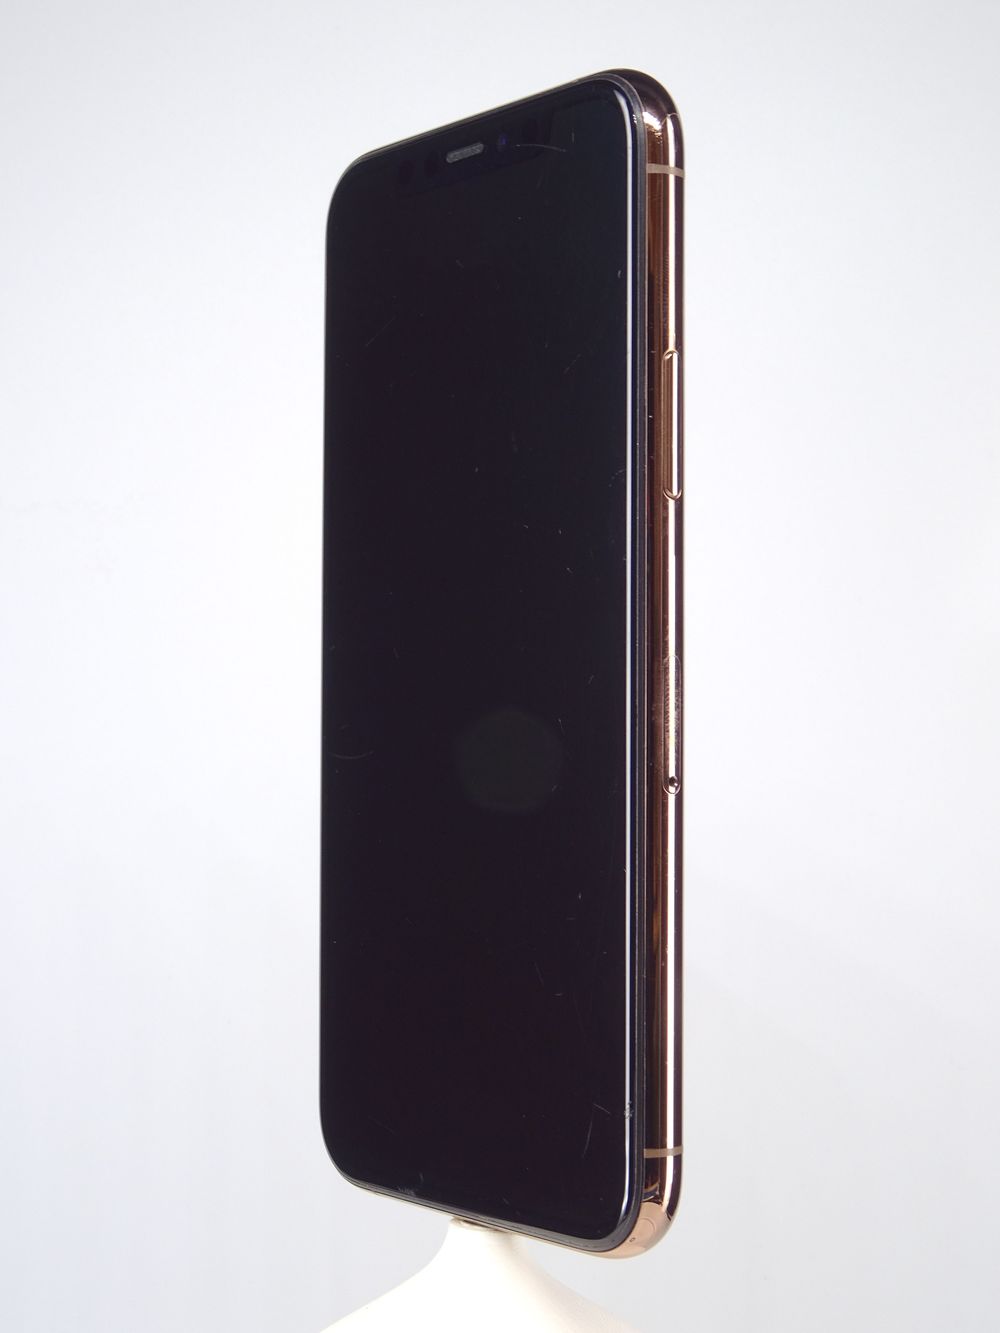 Telefon mobil Apple iPhone 11 Pro, Gold, 64 GB,  Foarte Bun